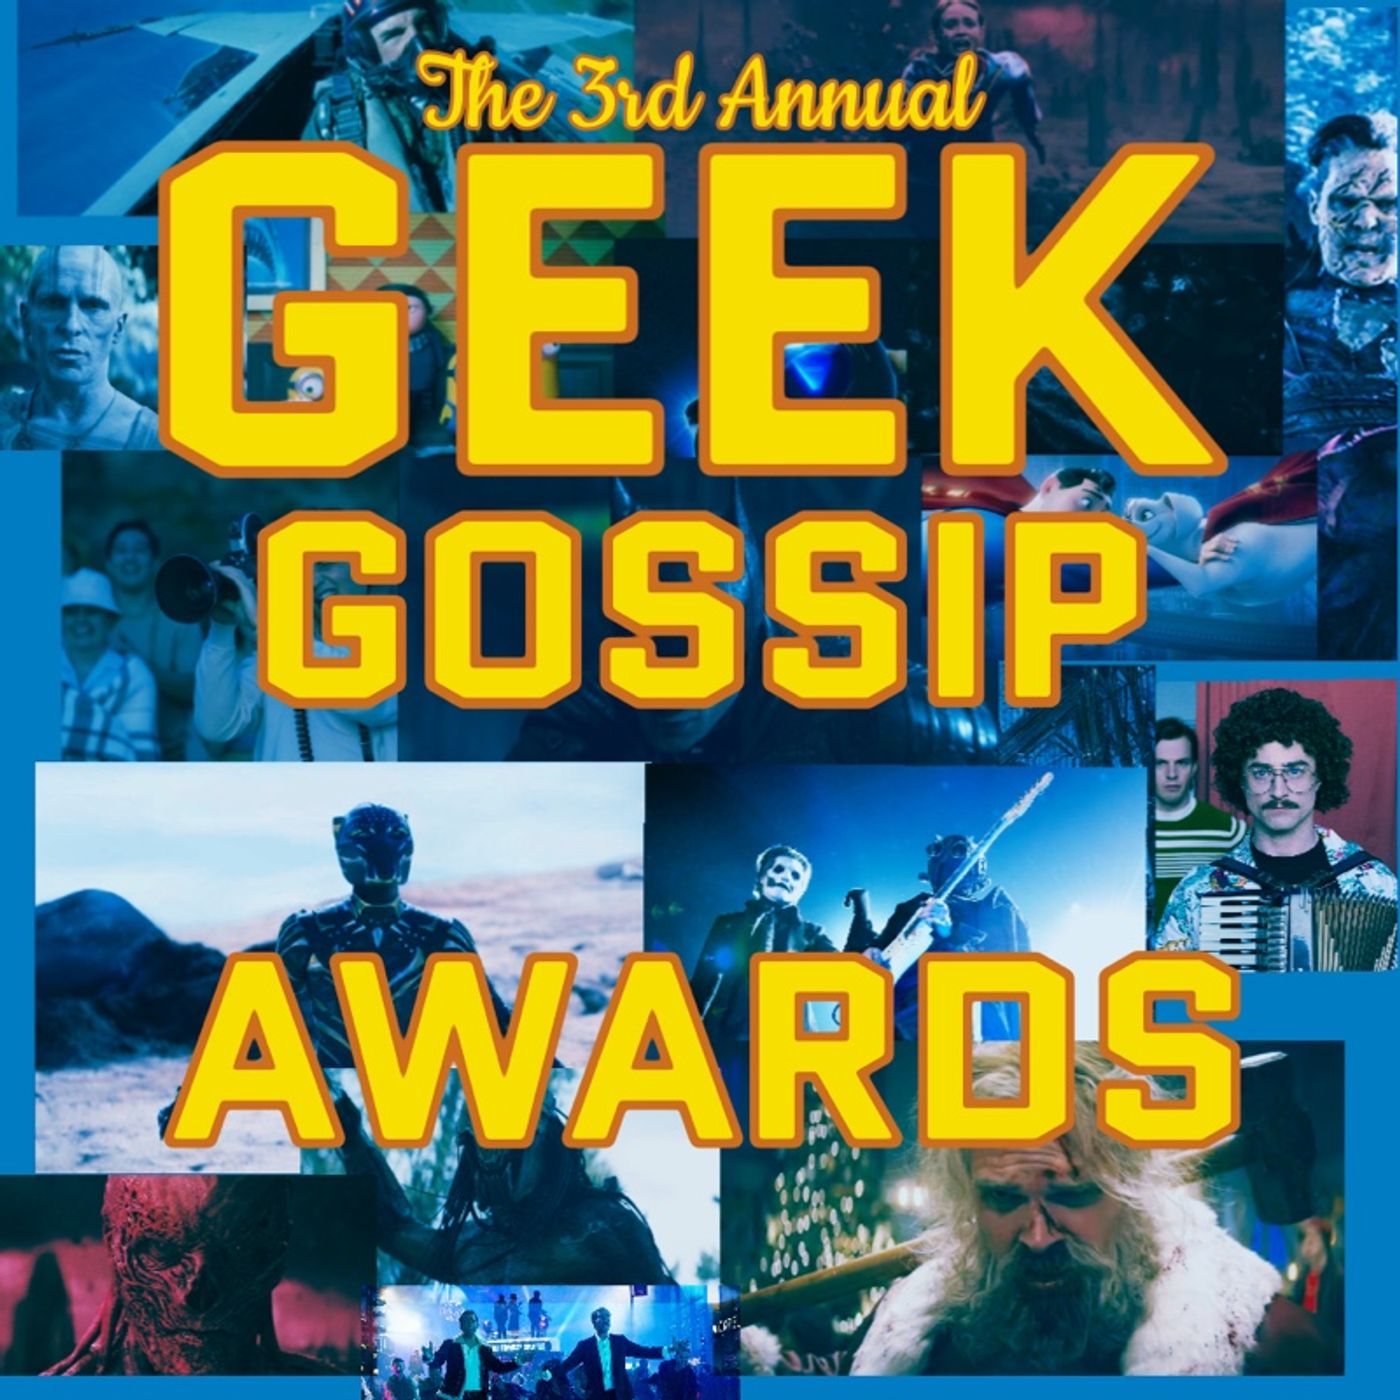 The 3rd Annual Geek Gossip Awards!